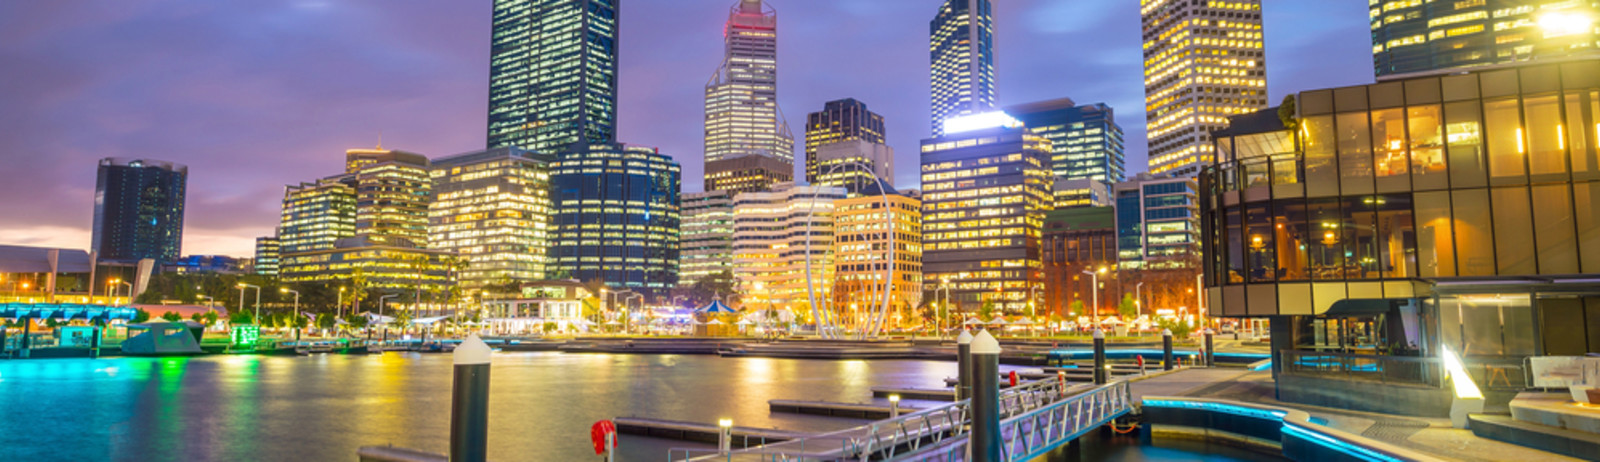 Downtown Perth skyline in Australia at twilight.